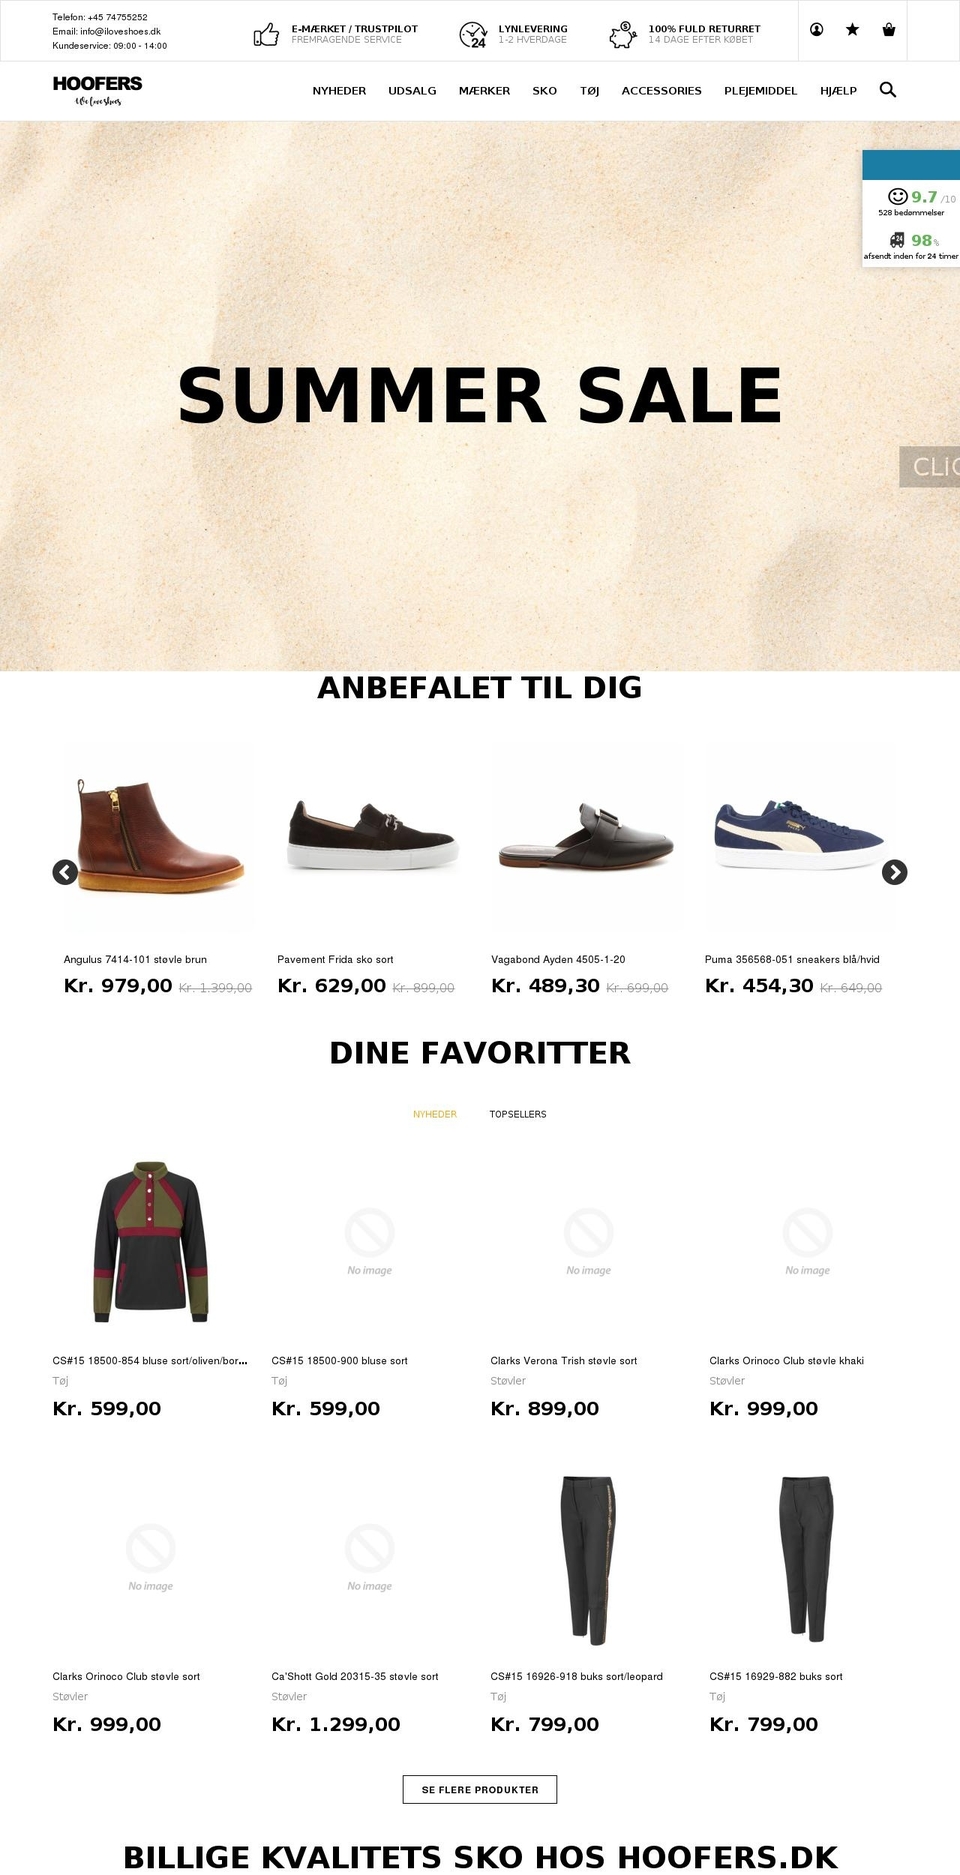 hoofers.dk shopify website screenshot